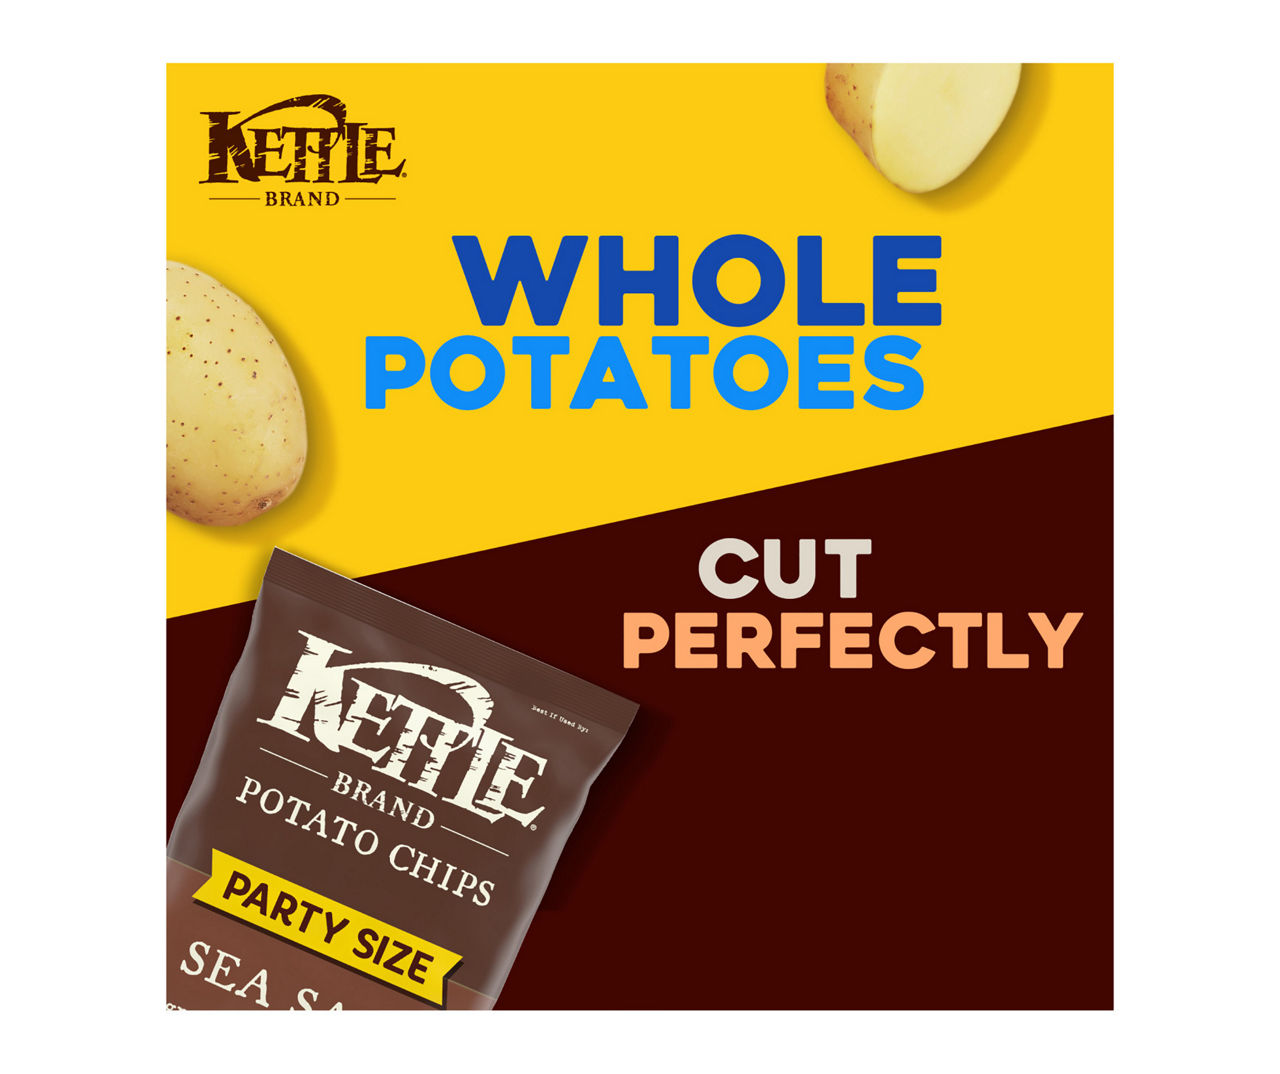 Sea Salt Potato Chips, 13 oz, Kettle Brand